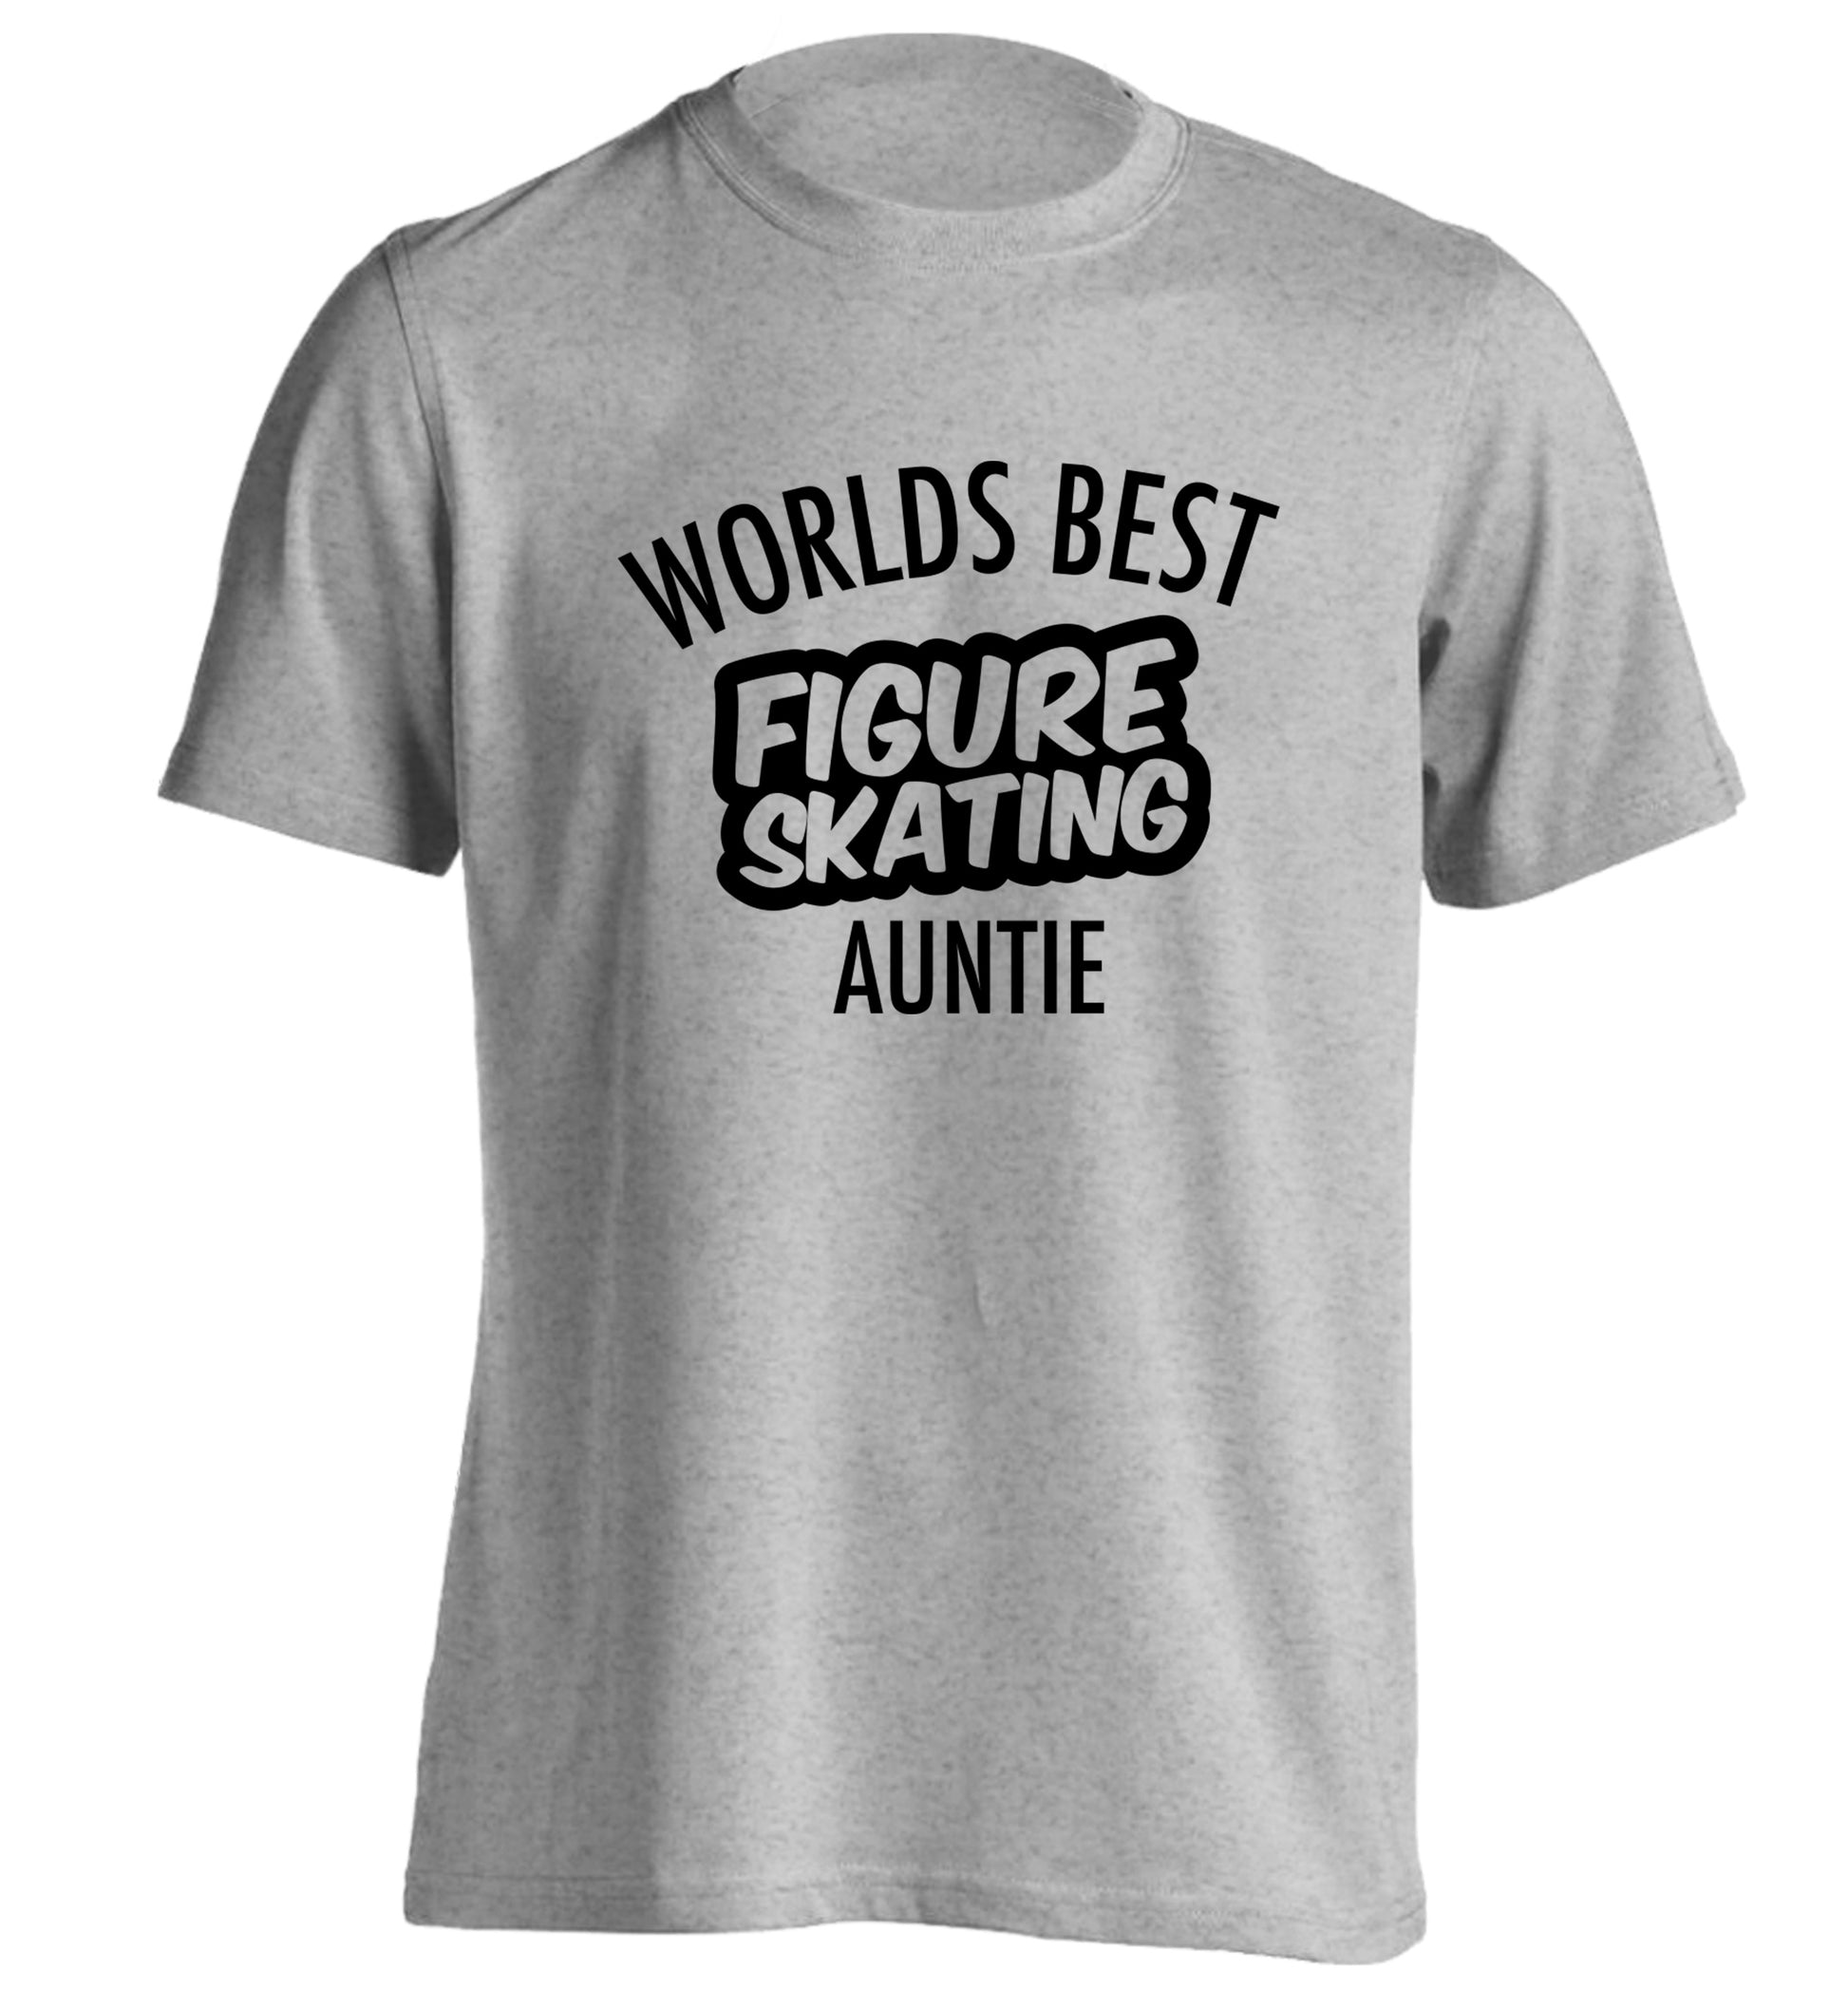 Worlds best figure skating auntie adults unisexgrey Tshirt 2XL